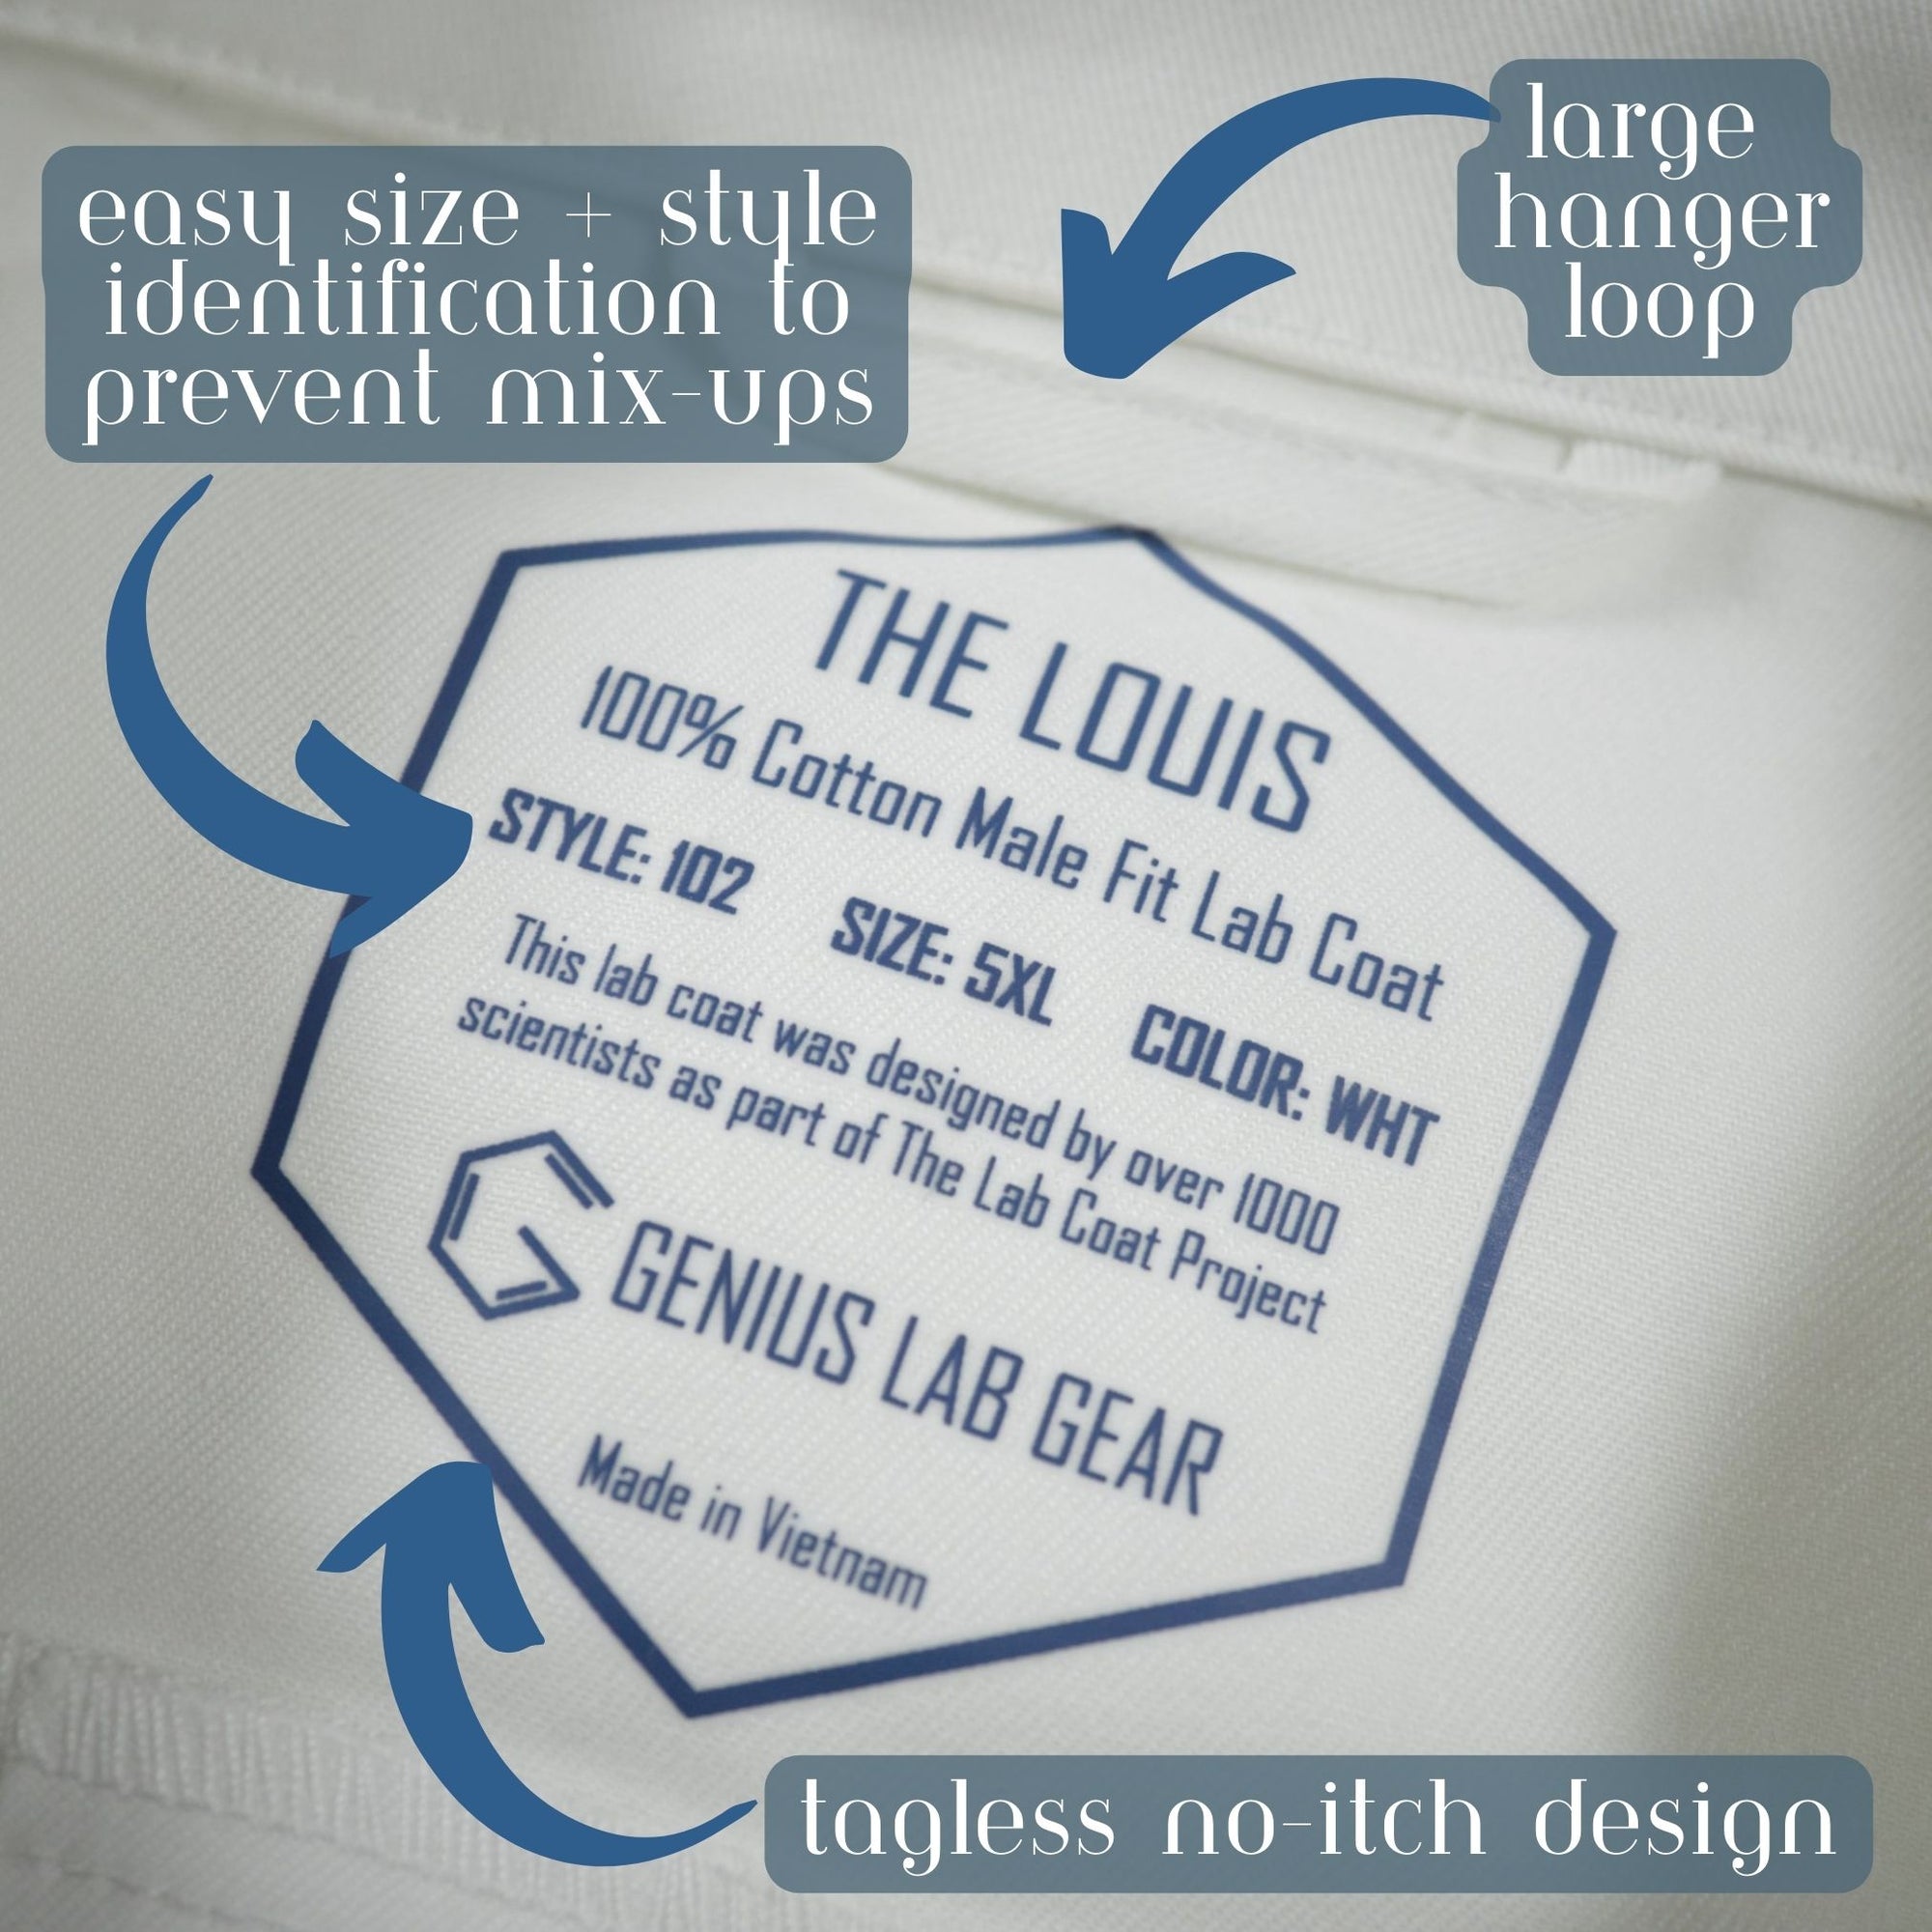 the louis tagless lab coat neck design by genius lab gear